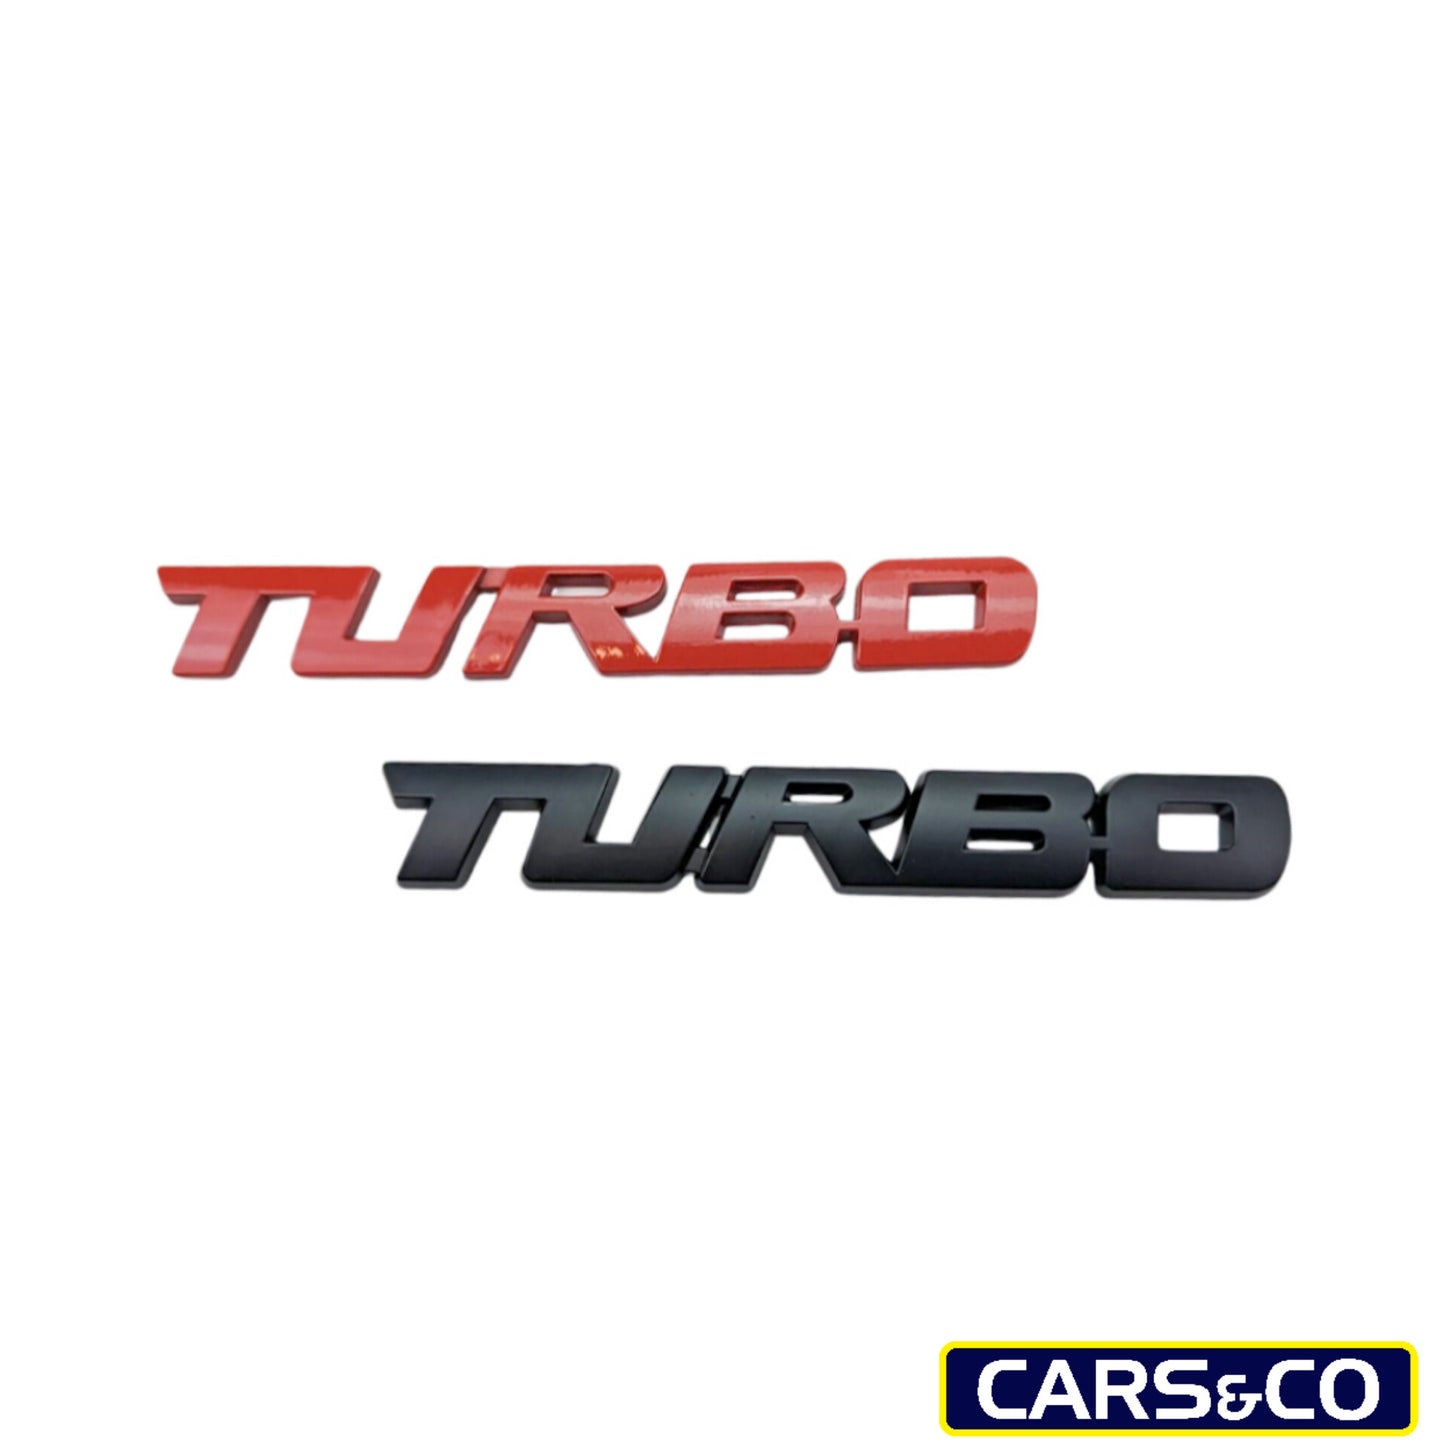 Modified Side Car Standard Turbocharged Turbo